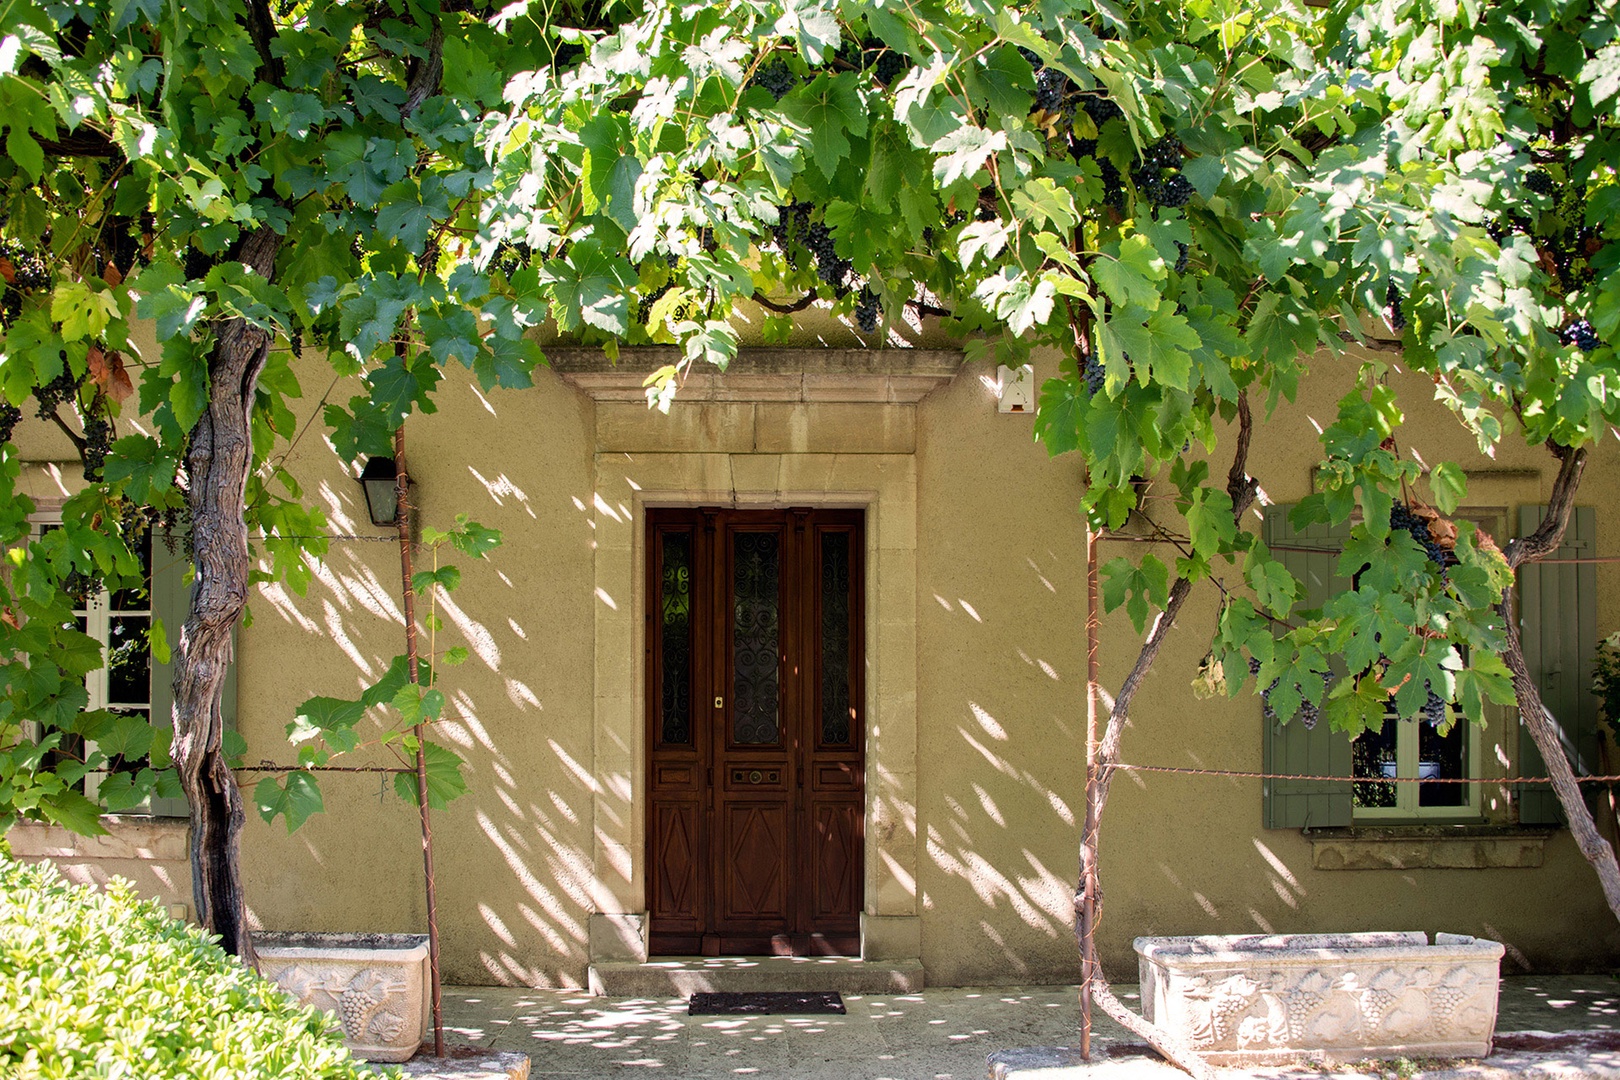 Grapevine trellis around the entrance to Le Laurier-Rose Villa.